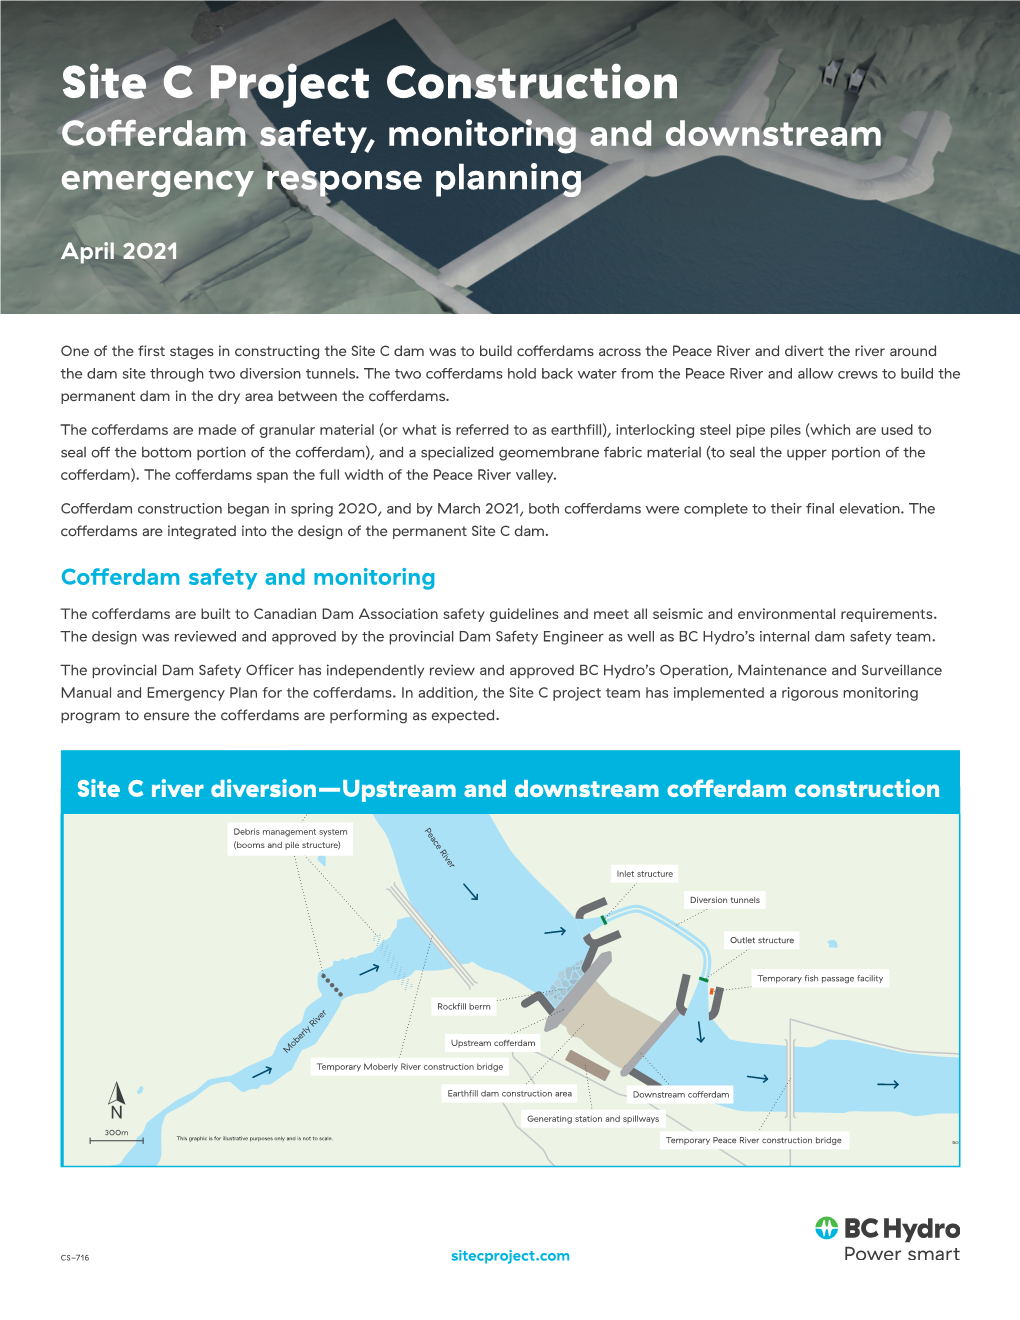 Cofferdam Safety, Monitoring and Downstream Emergency Response Planning